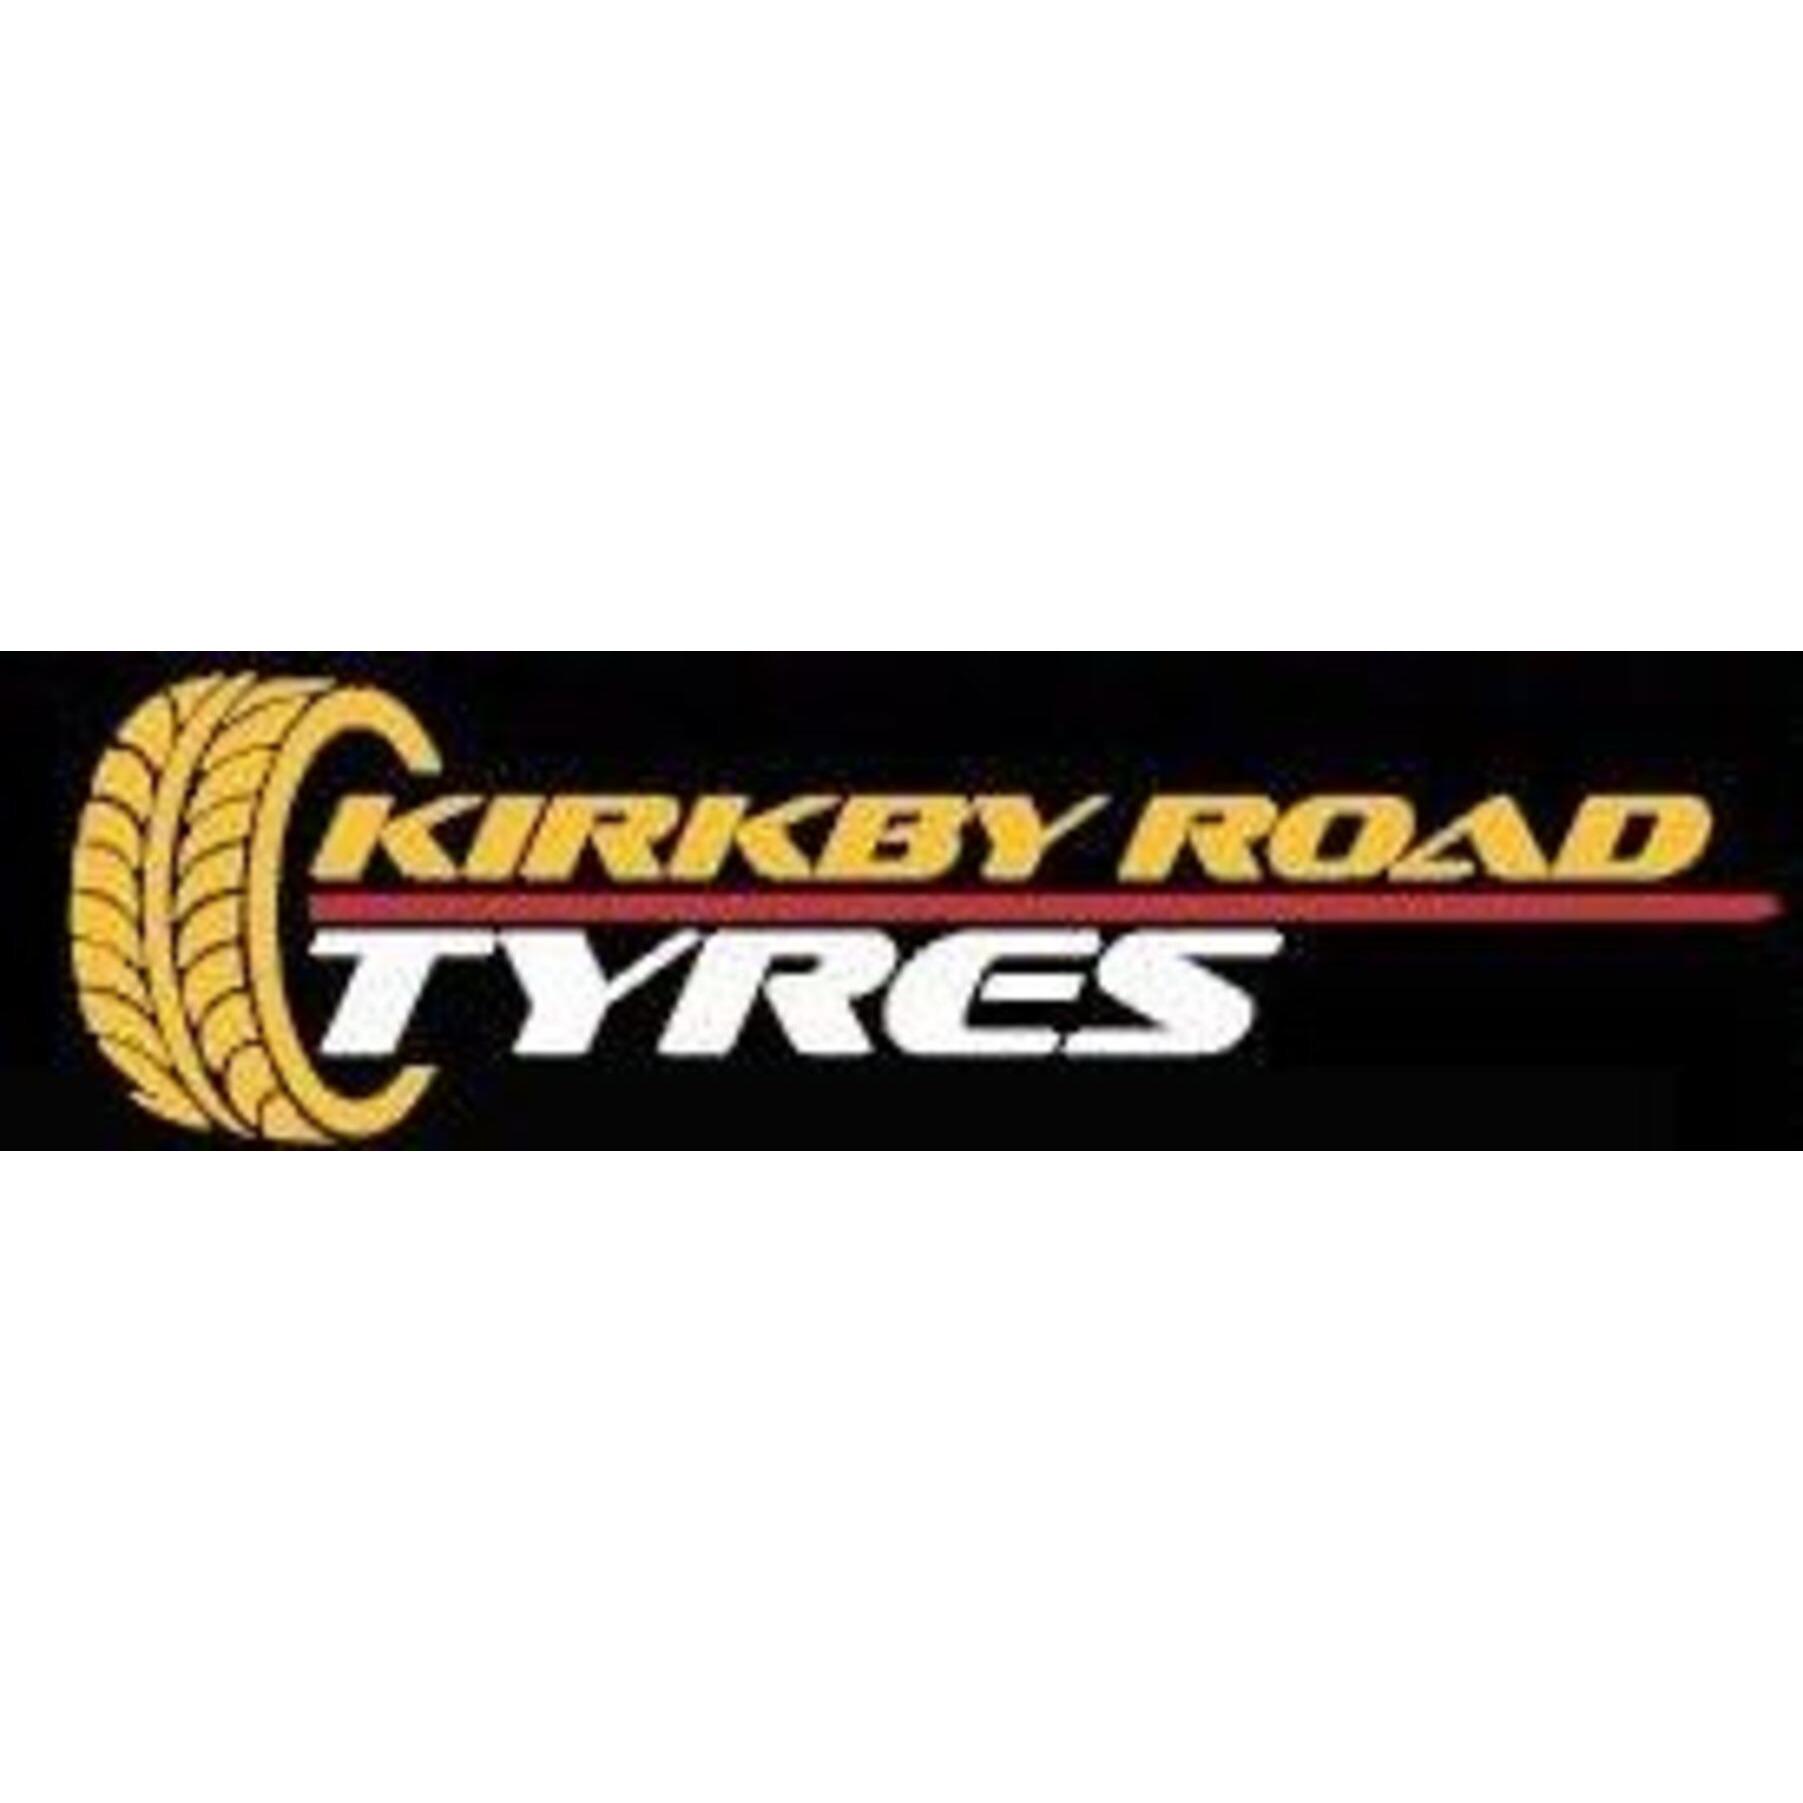 KIRKBY ROAD TYRES logo